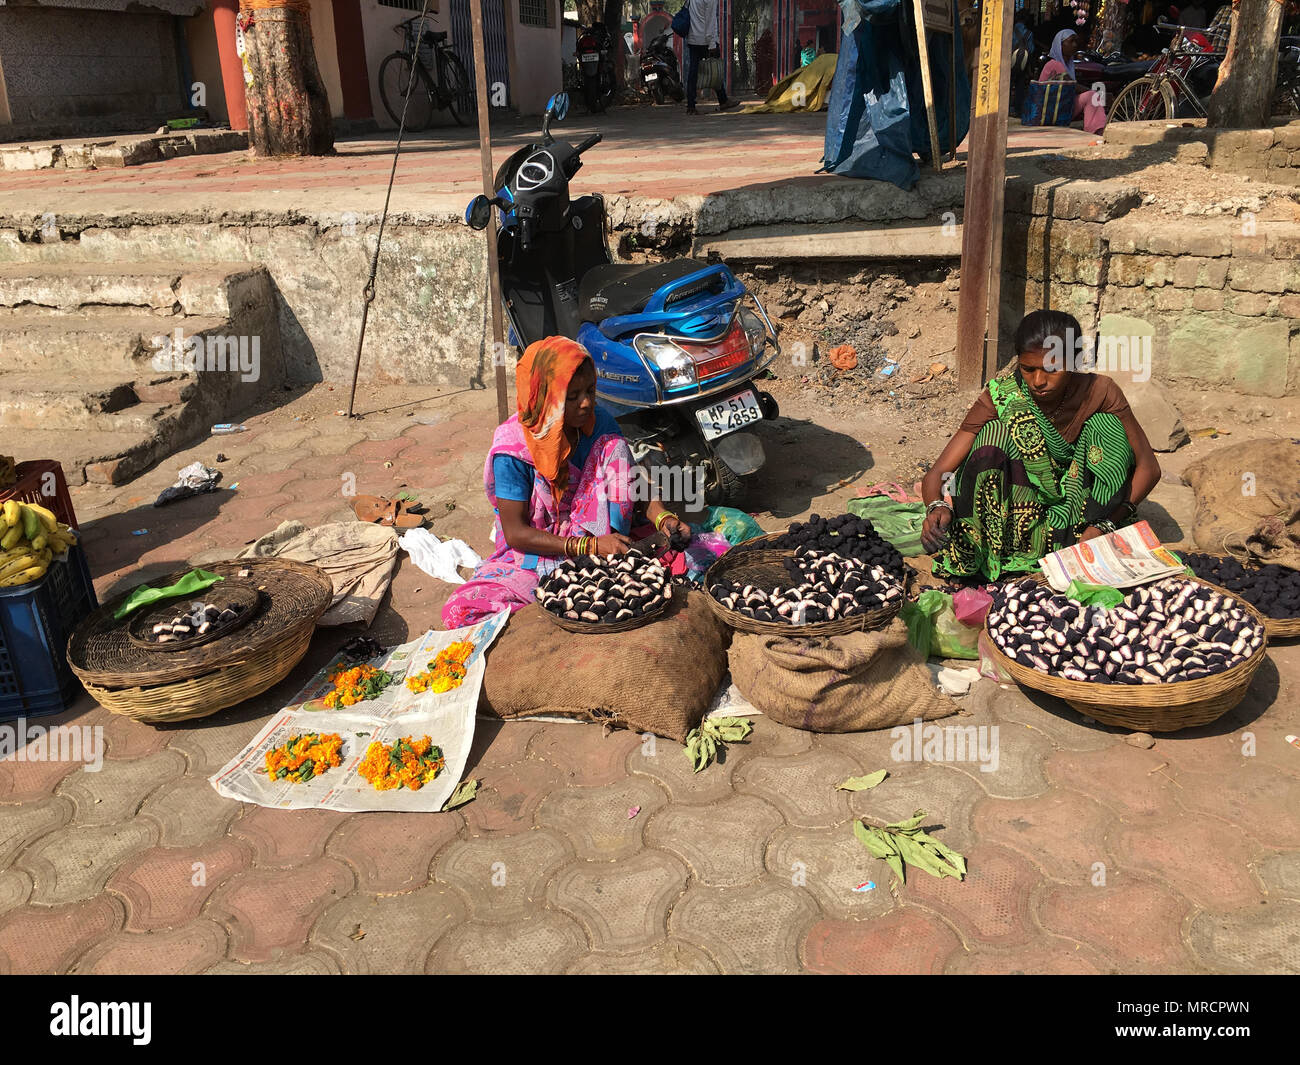 Mandla, Madhya Pradesh, India - November 25, 2015: Indian women with colorful traditional garments selling their produce at an informal street market Stock Photo